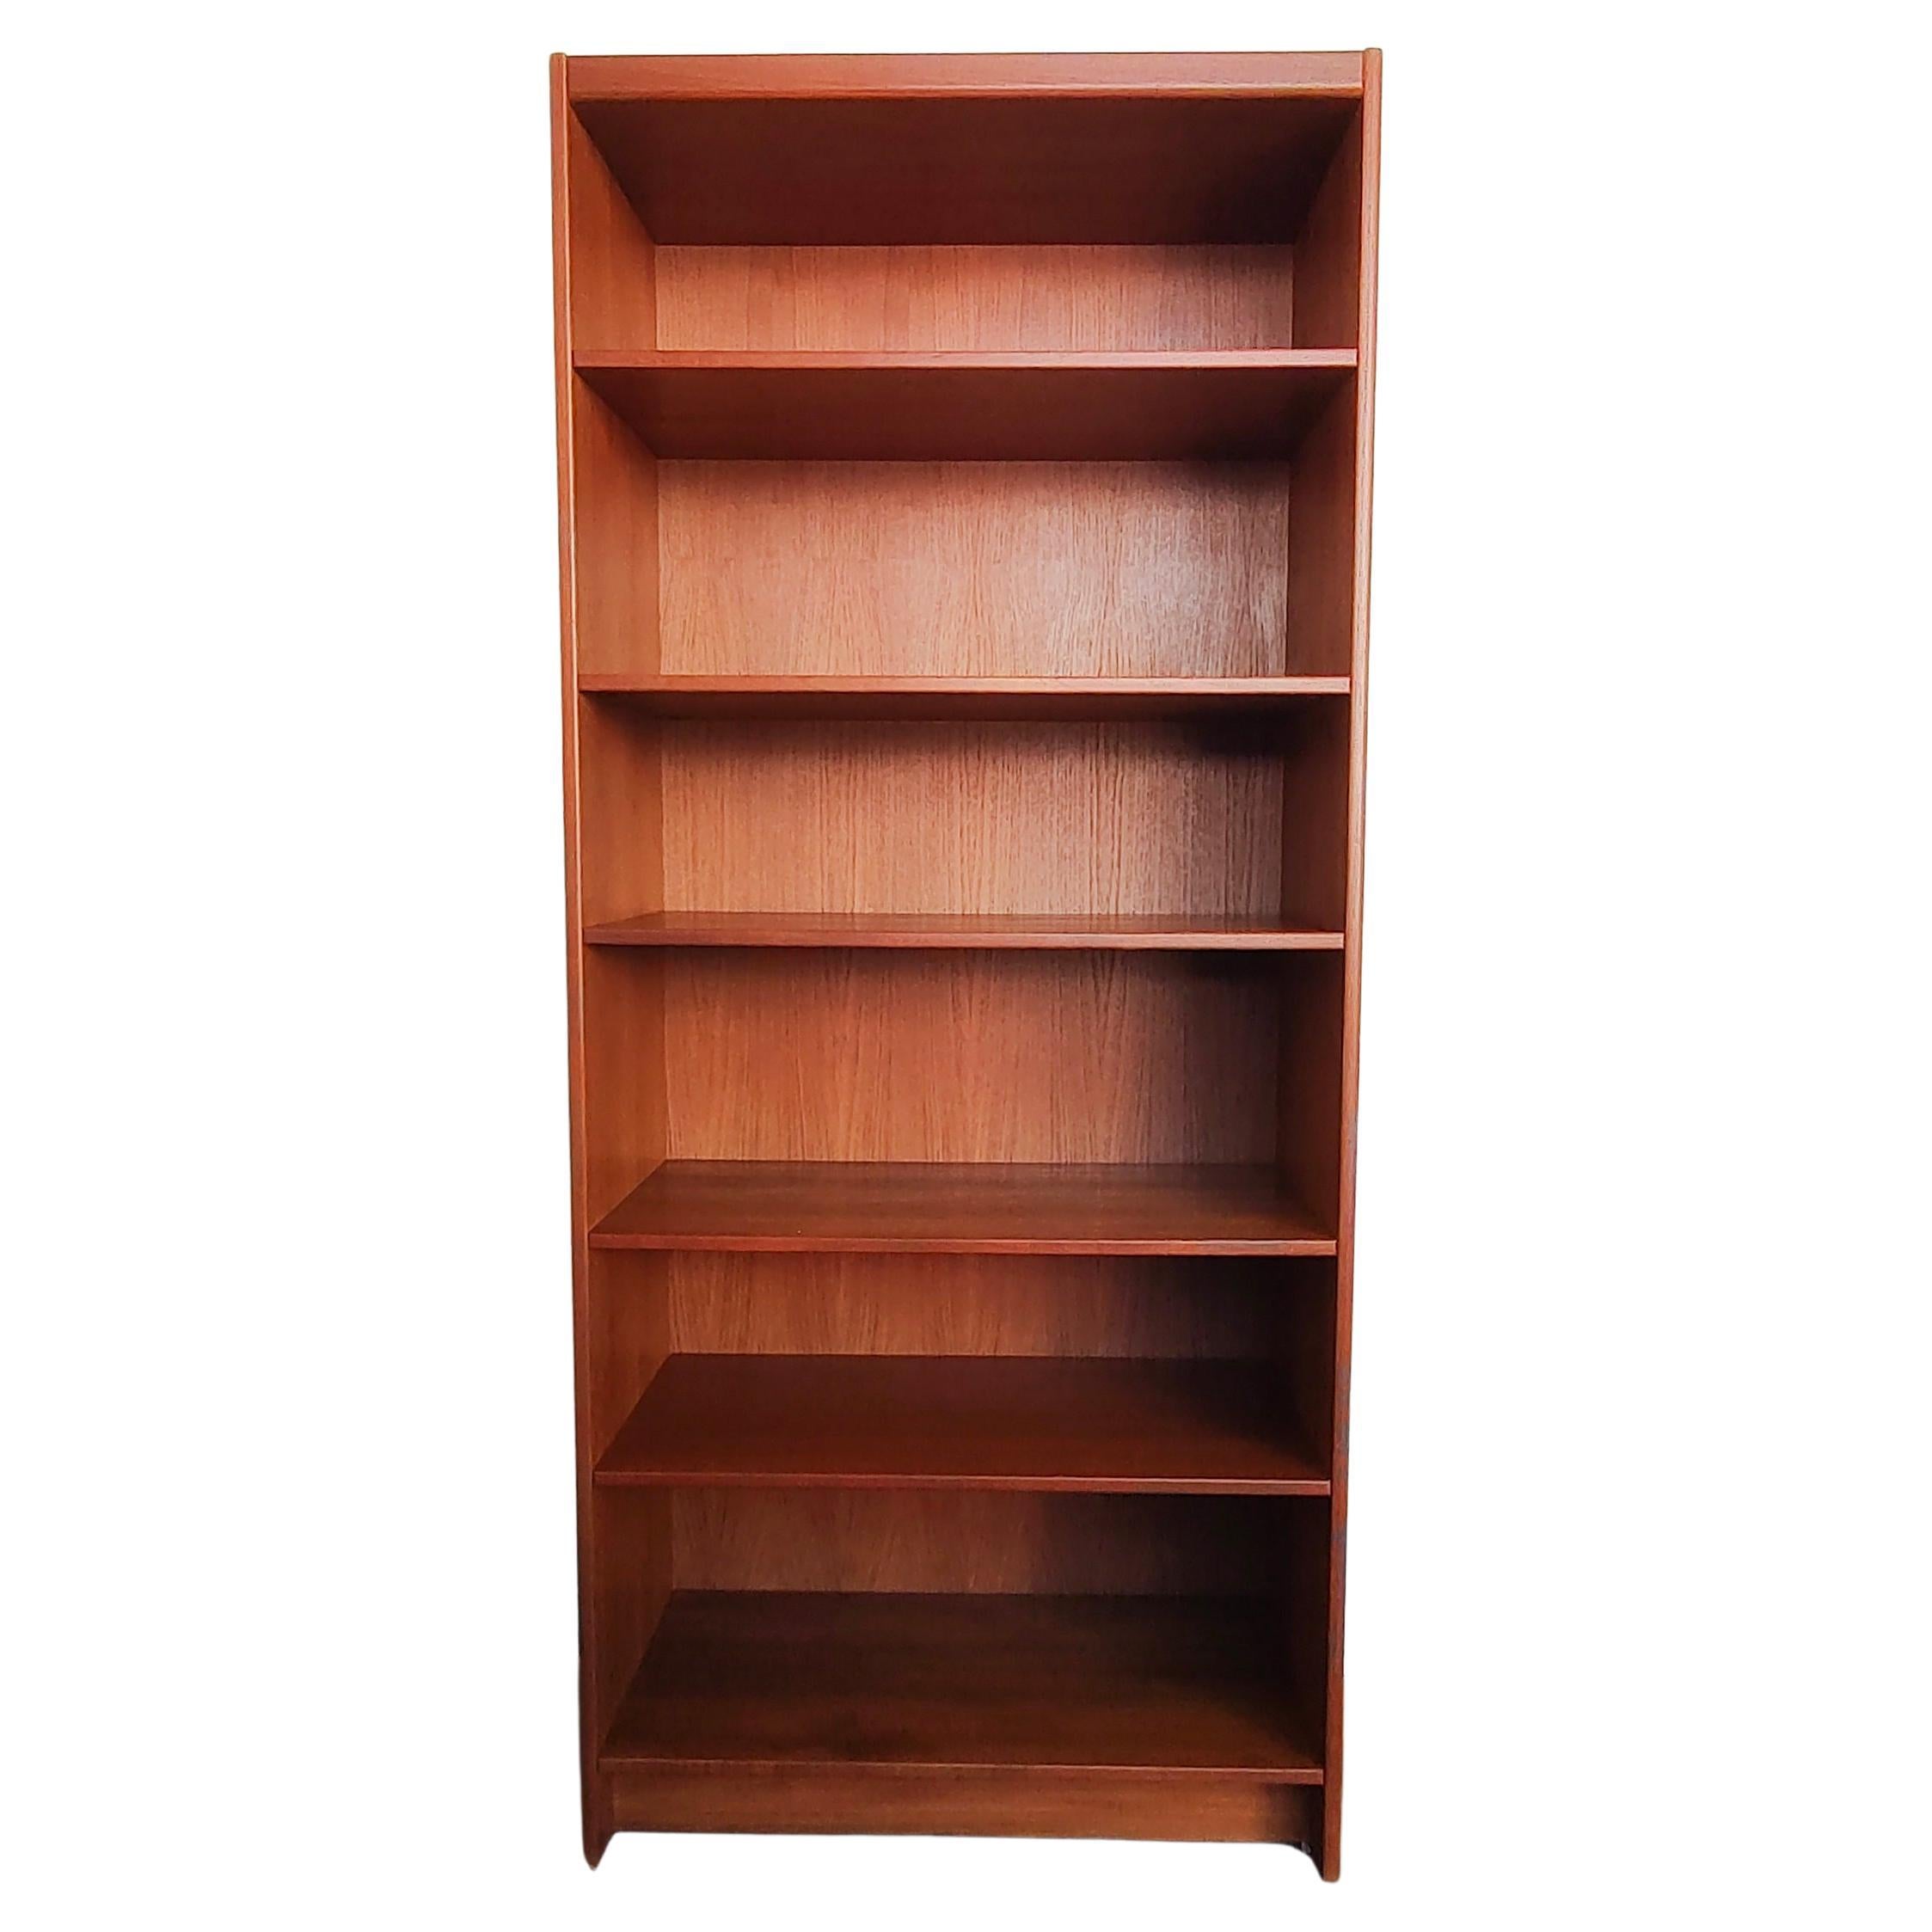 Danish Mid-Century Modern Teak Wood Tall Shelf Bookshelf Bookcase